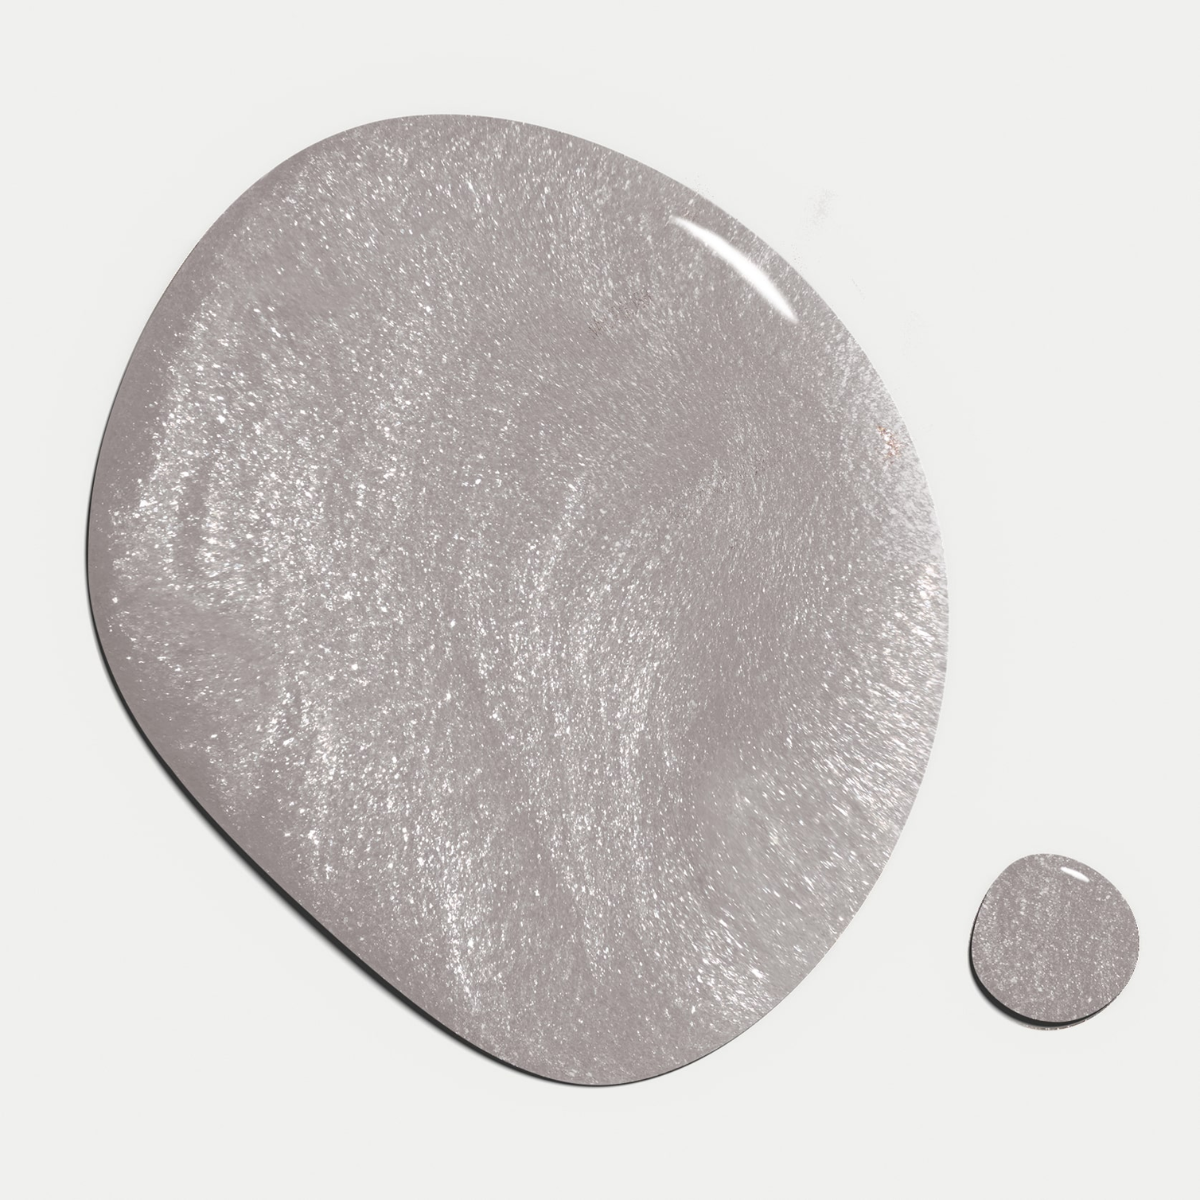 Nilens Jord - Nail Polish – Silver Glitter